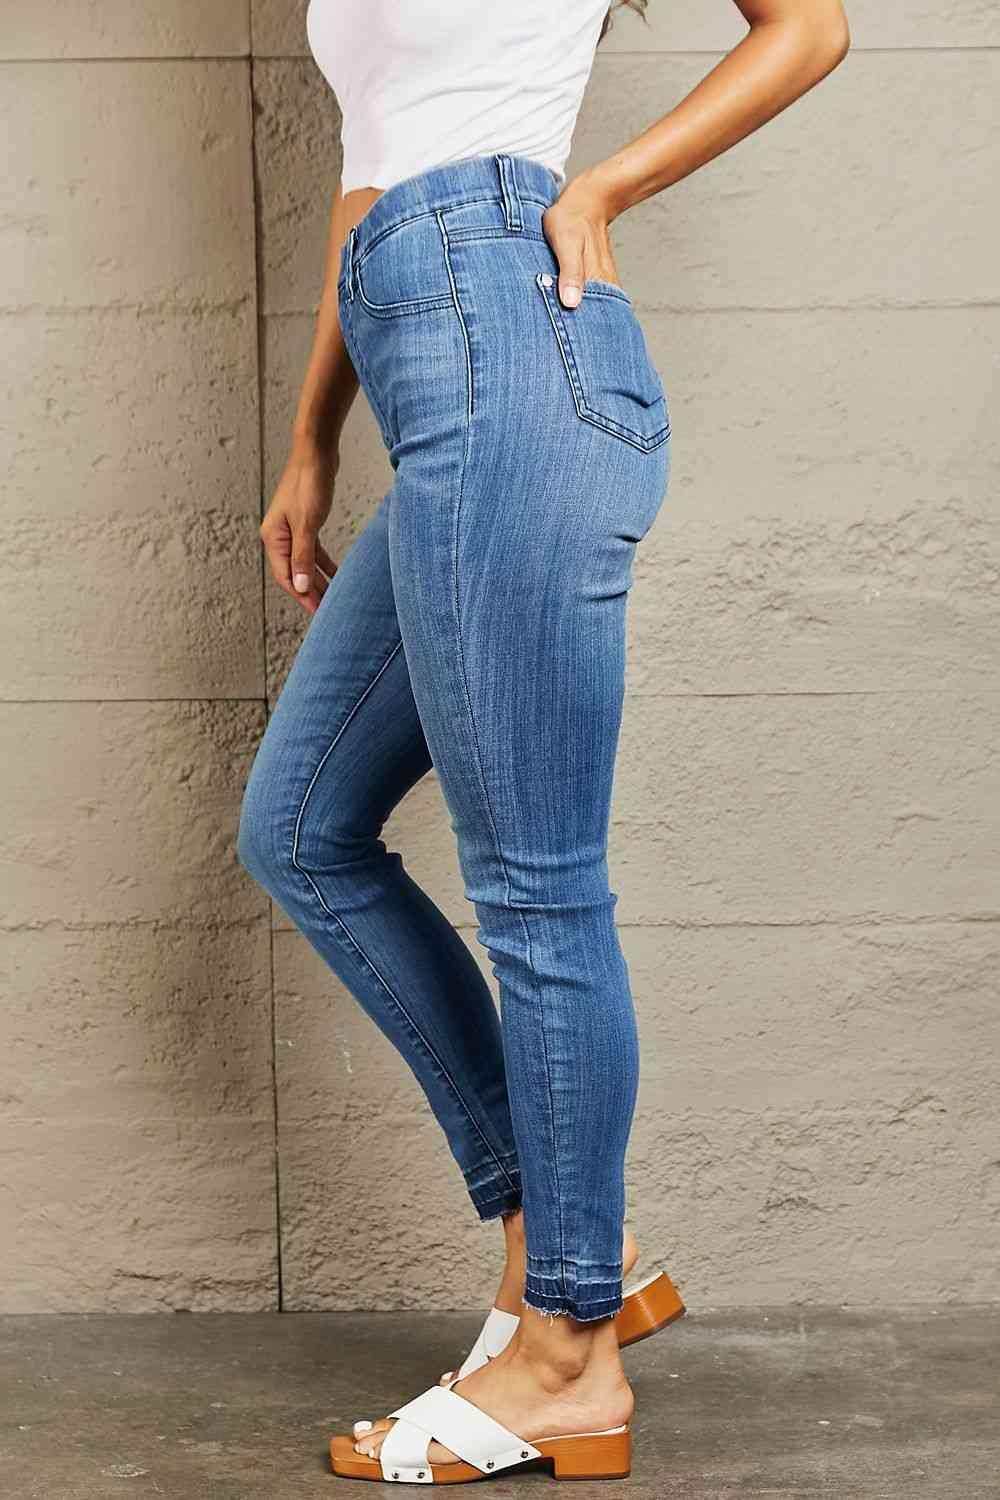 Bona Fide Fashion - Full Size High Waisted Pull On Skinny Jeans - Women Fashion - Bona Fide Fashion